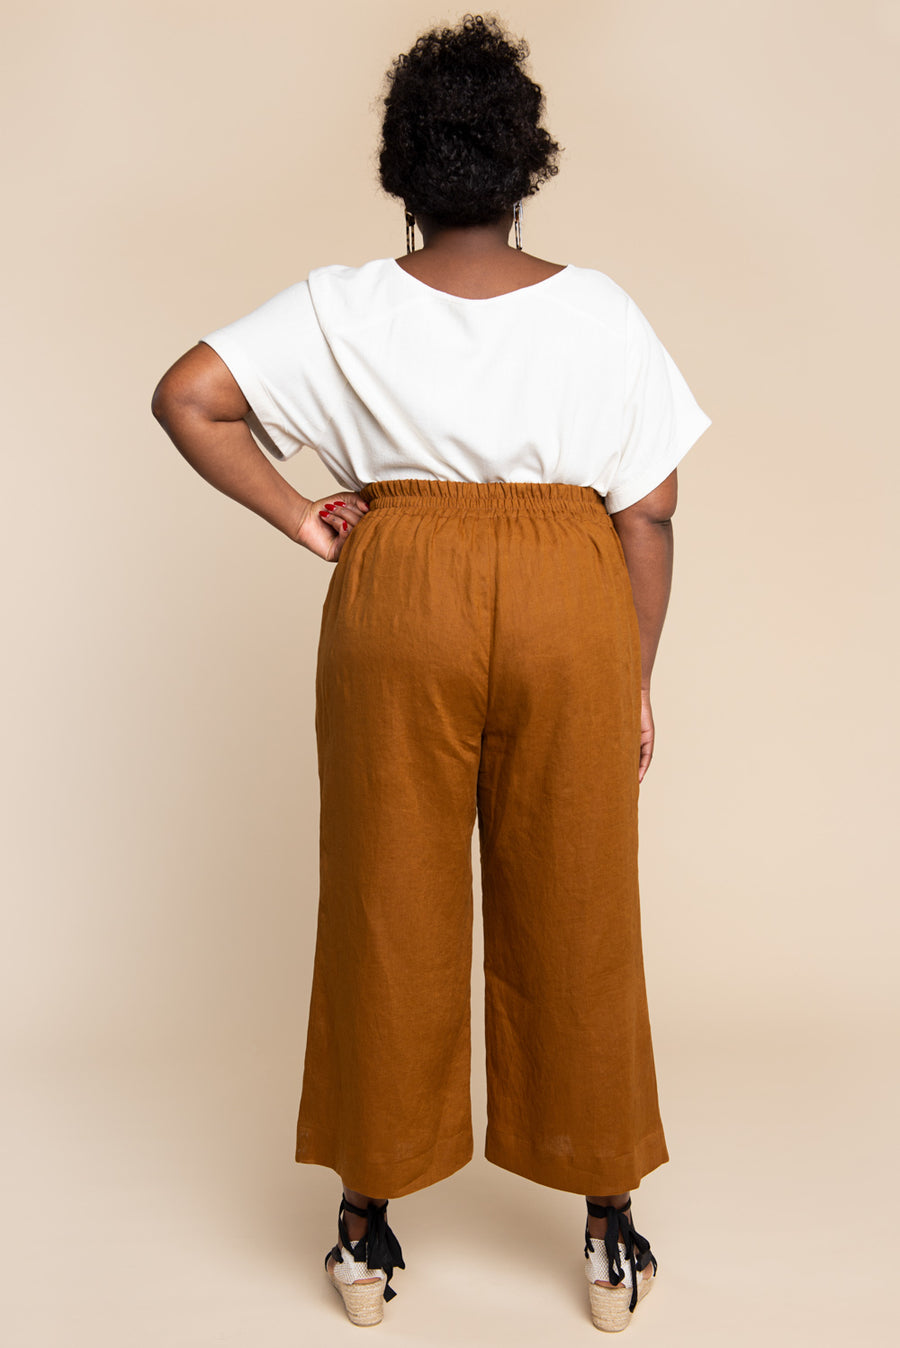 fcity.in - Redluv Girl Cotton Shorts Short Pants Hot Pants Regular Fit